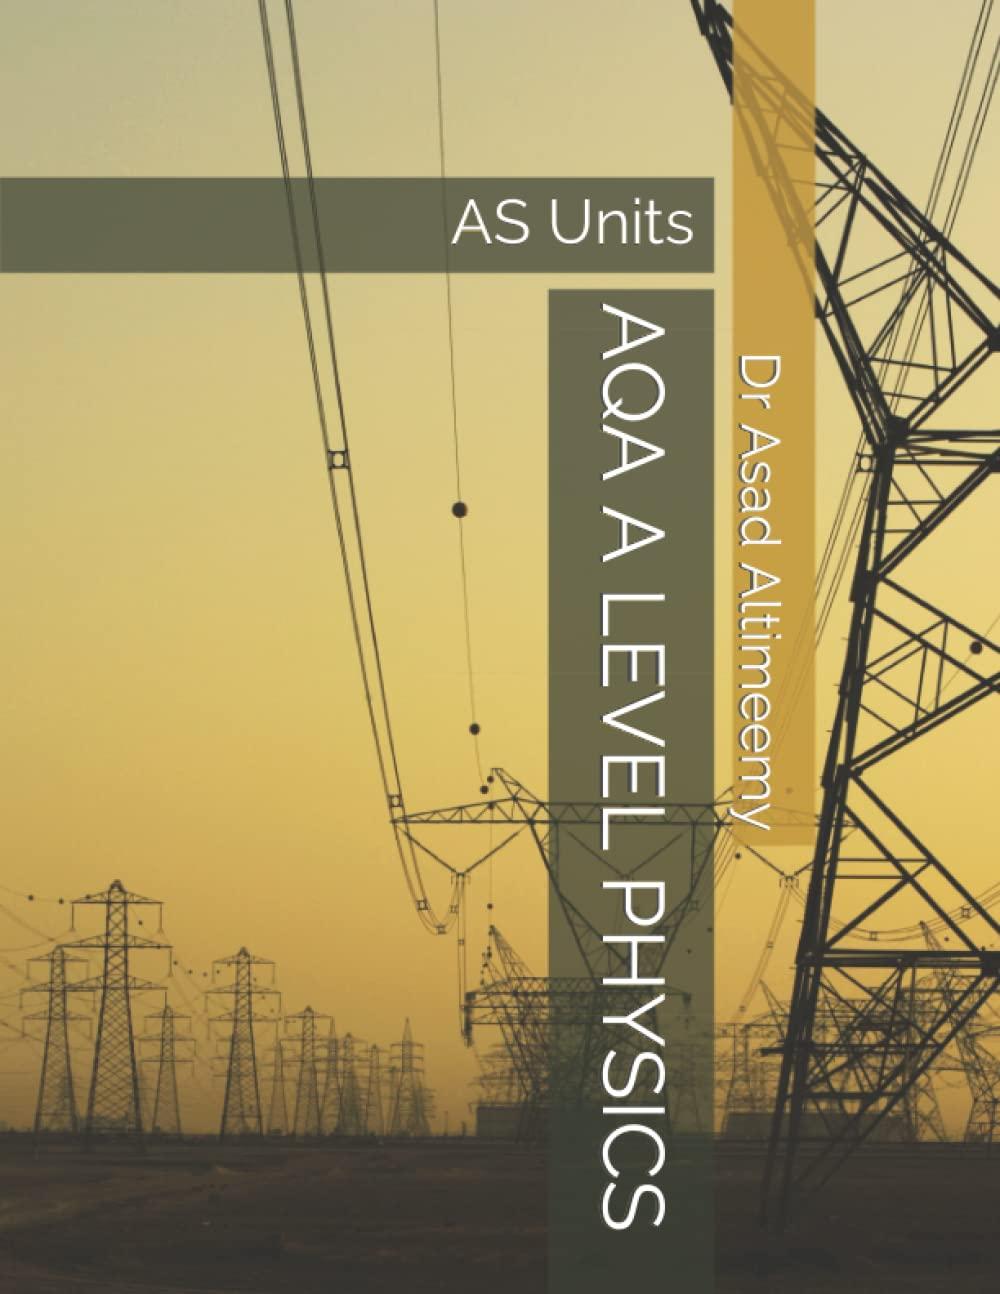 aqa a level physics as units 1st edition asad altimeemy b08gvlwhsq, 979-8680546116